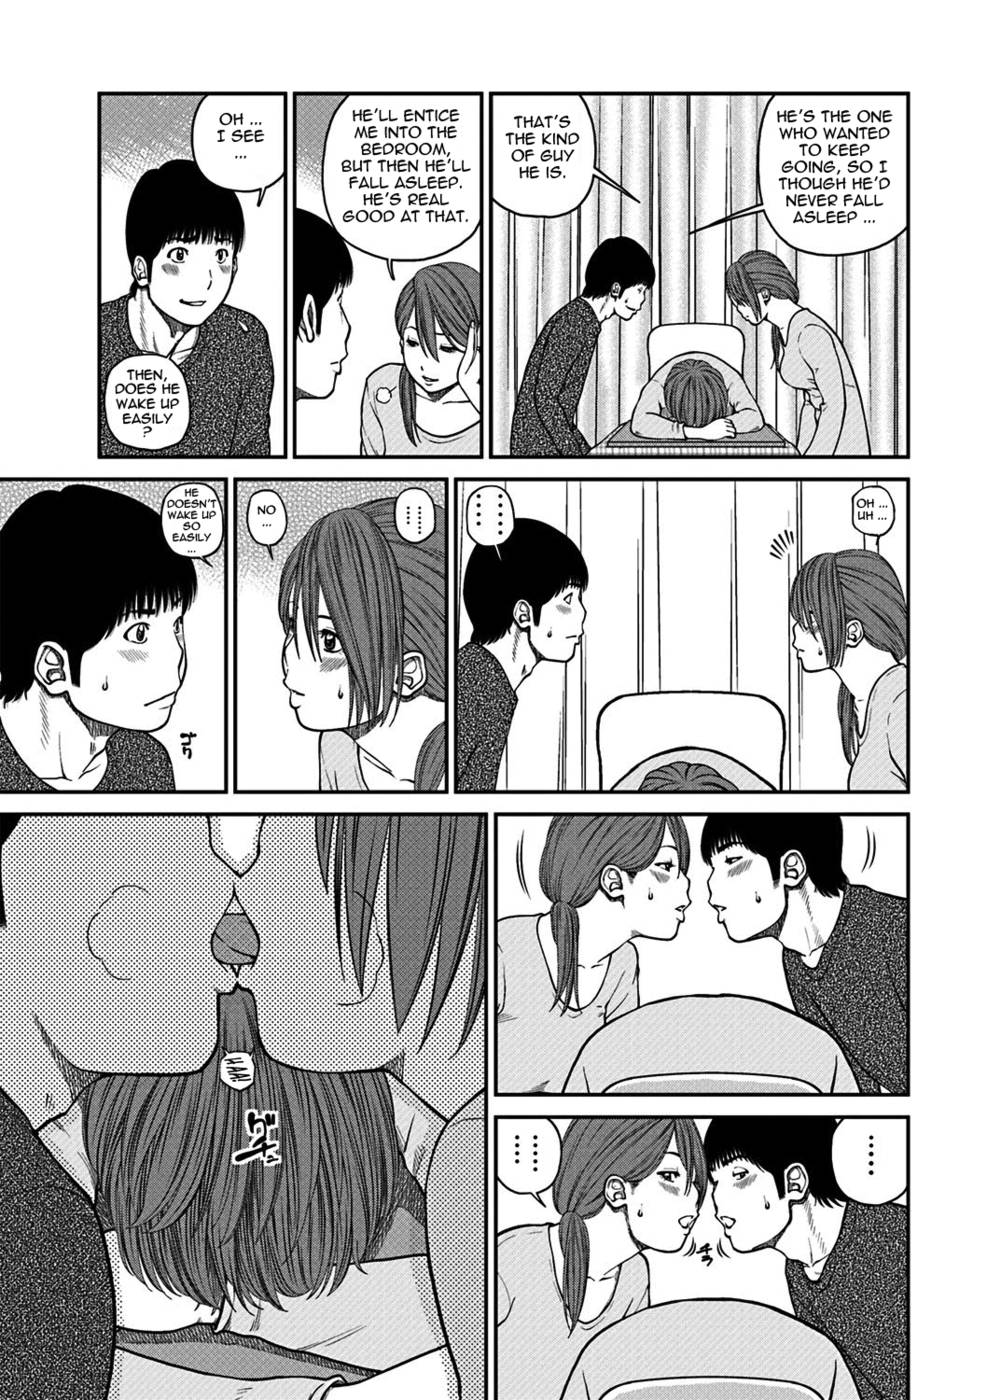 Sexxxxxxxxxxmom - 33 Year Old Unsatisfied Wife-Chapter 5-Under The Kotatsu-Hentai Manga  Hentai Comic - Page: 8 - Online porn video at mobile